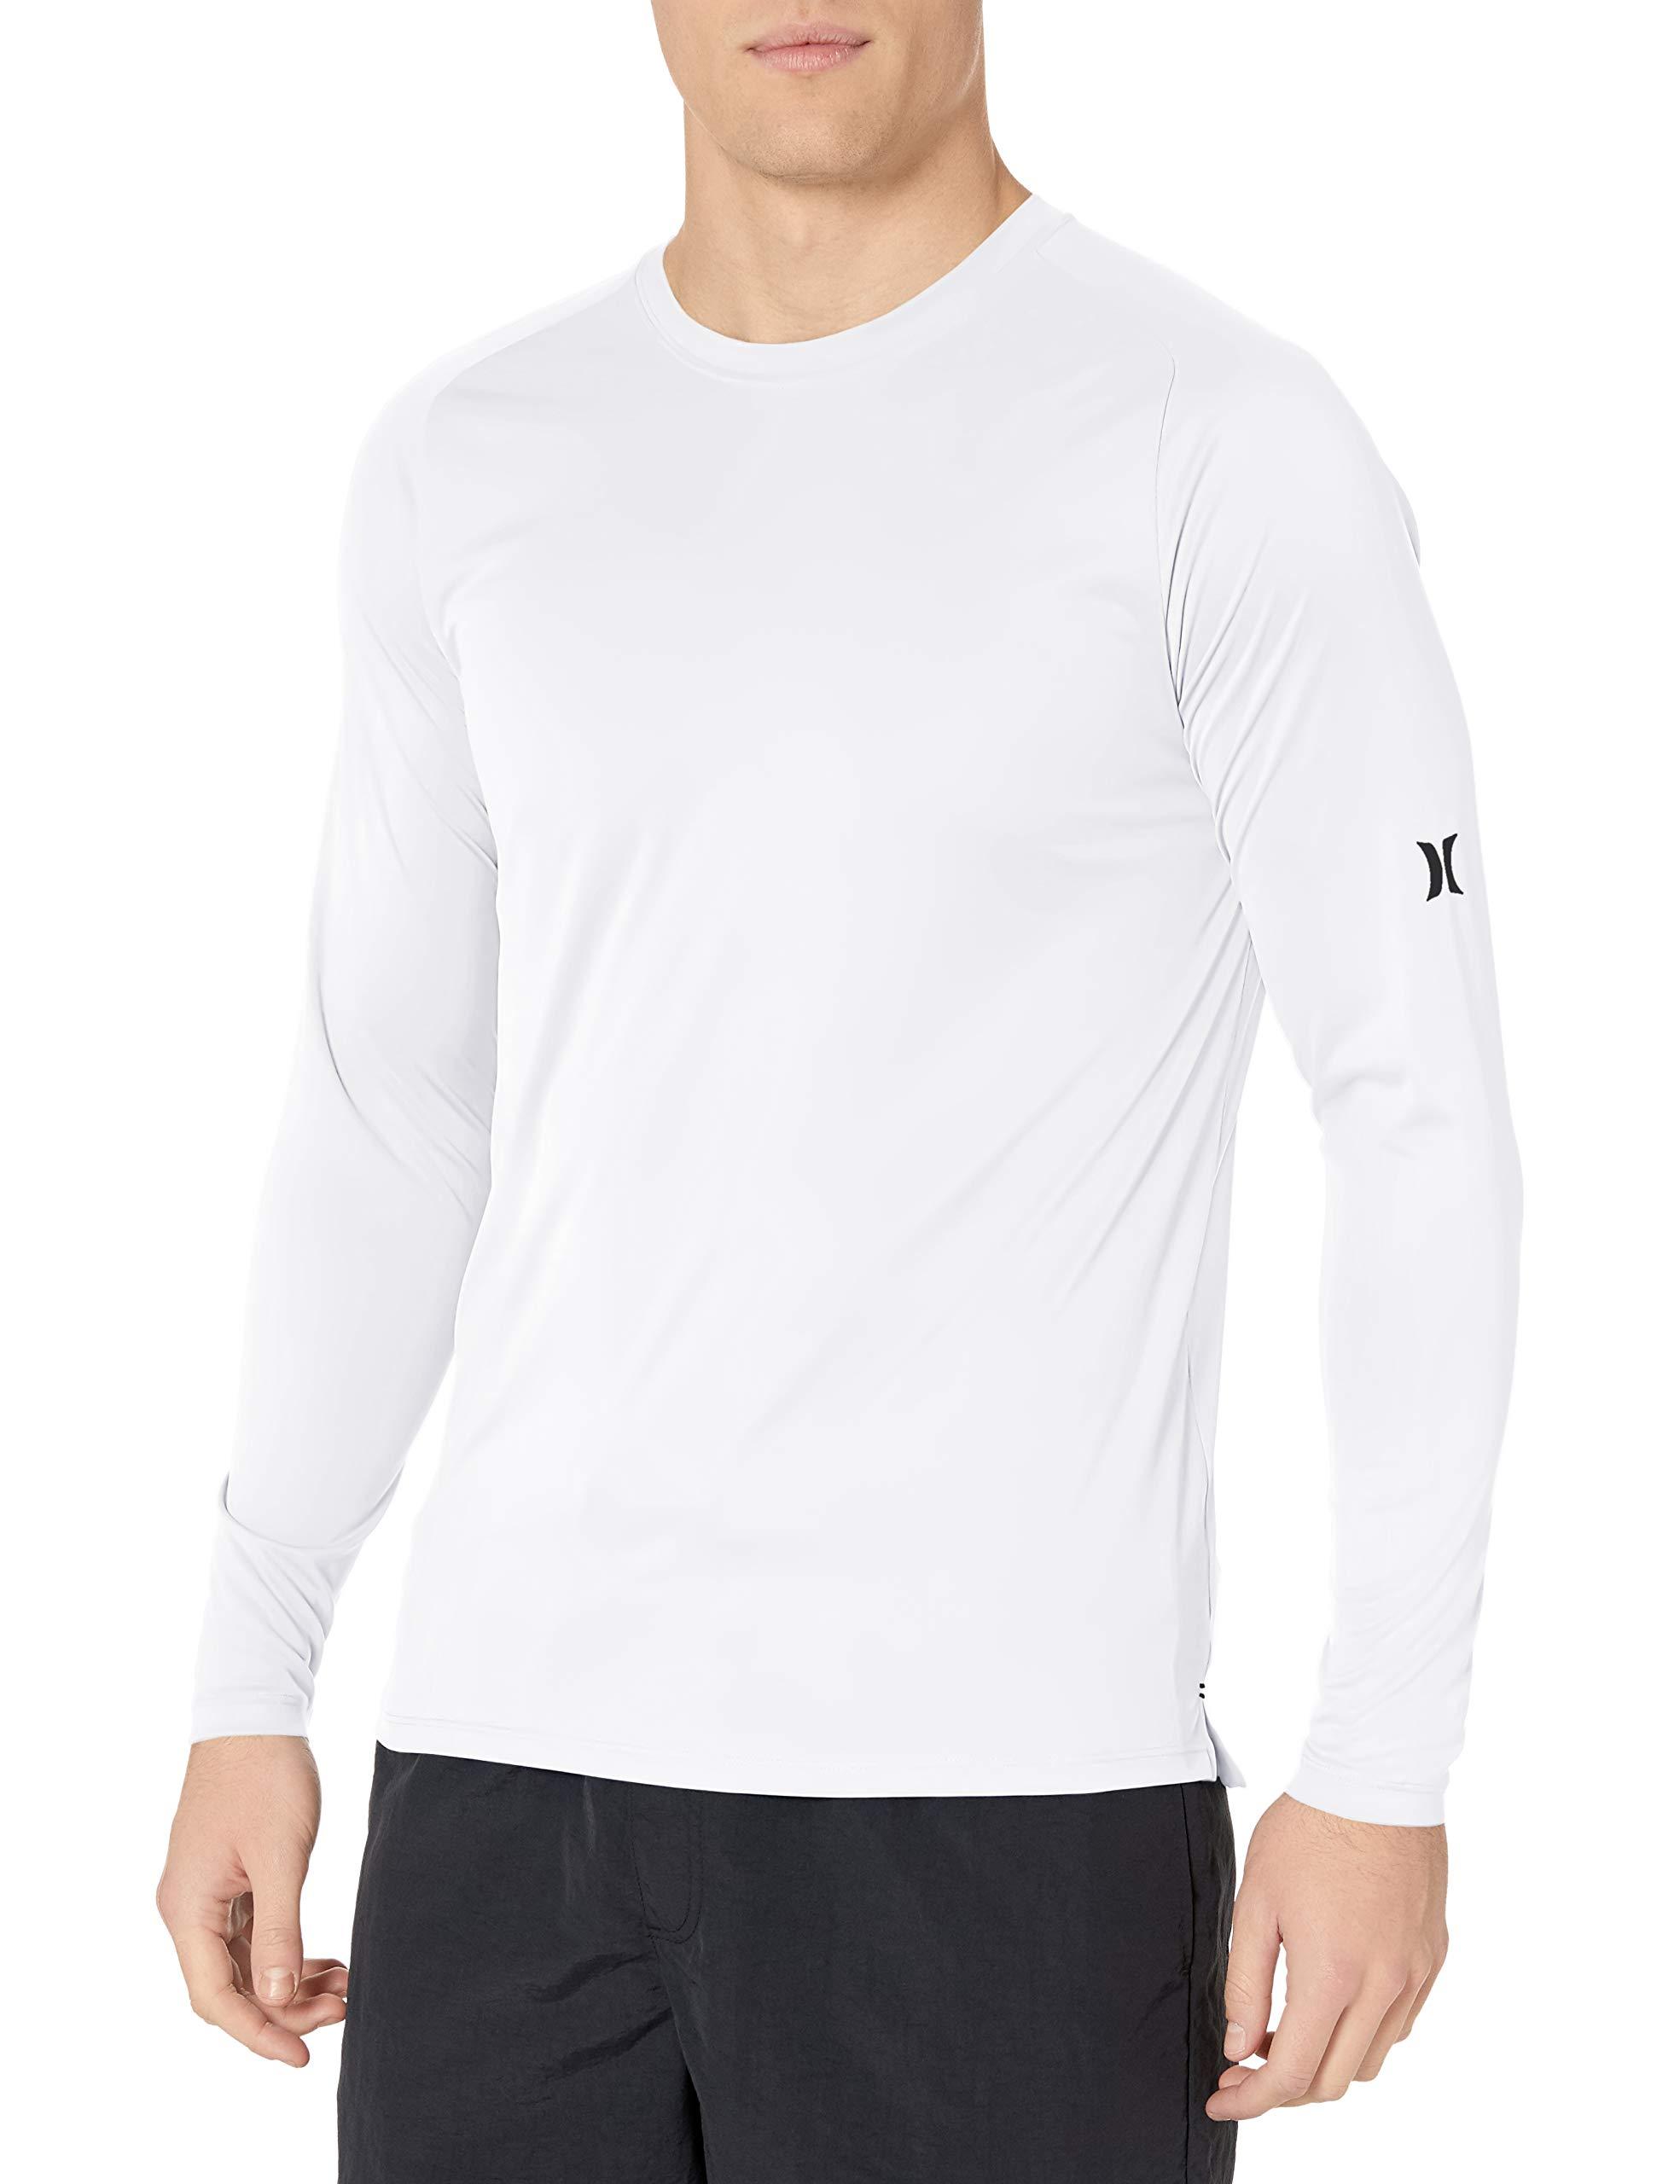 Hurley Nike Dri-fit Long Sleeve Sun Protection +50 Upf Rashguard in White for Men Lyst